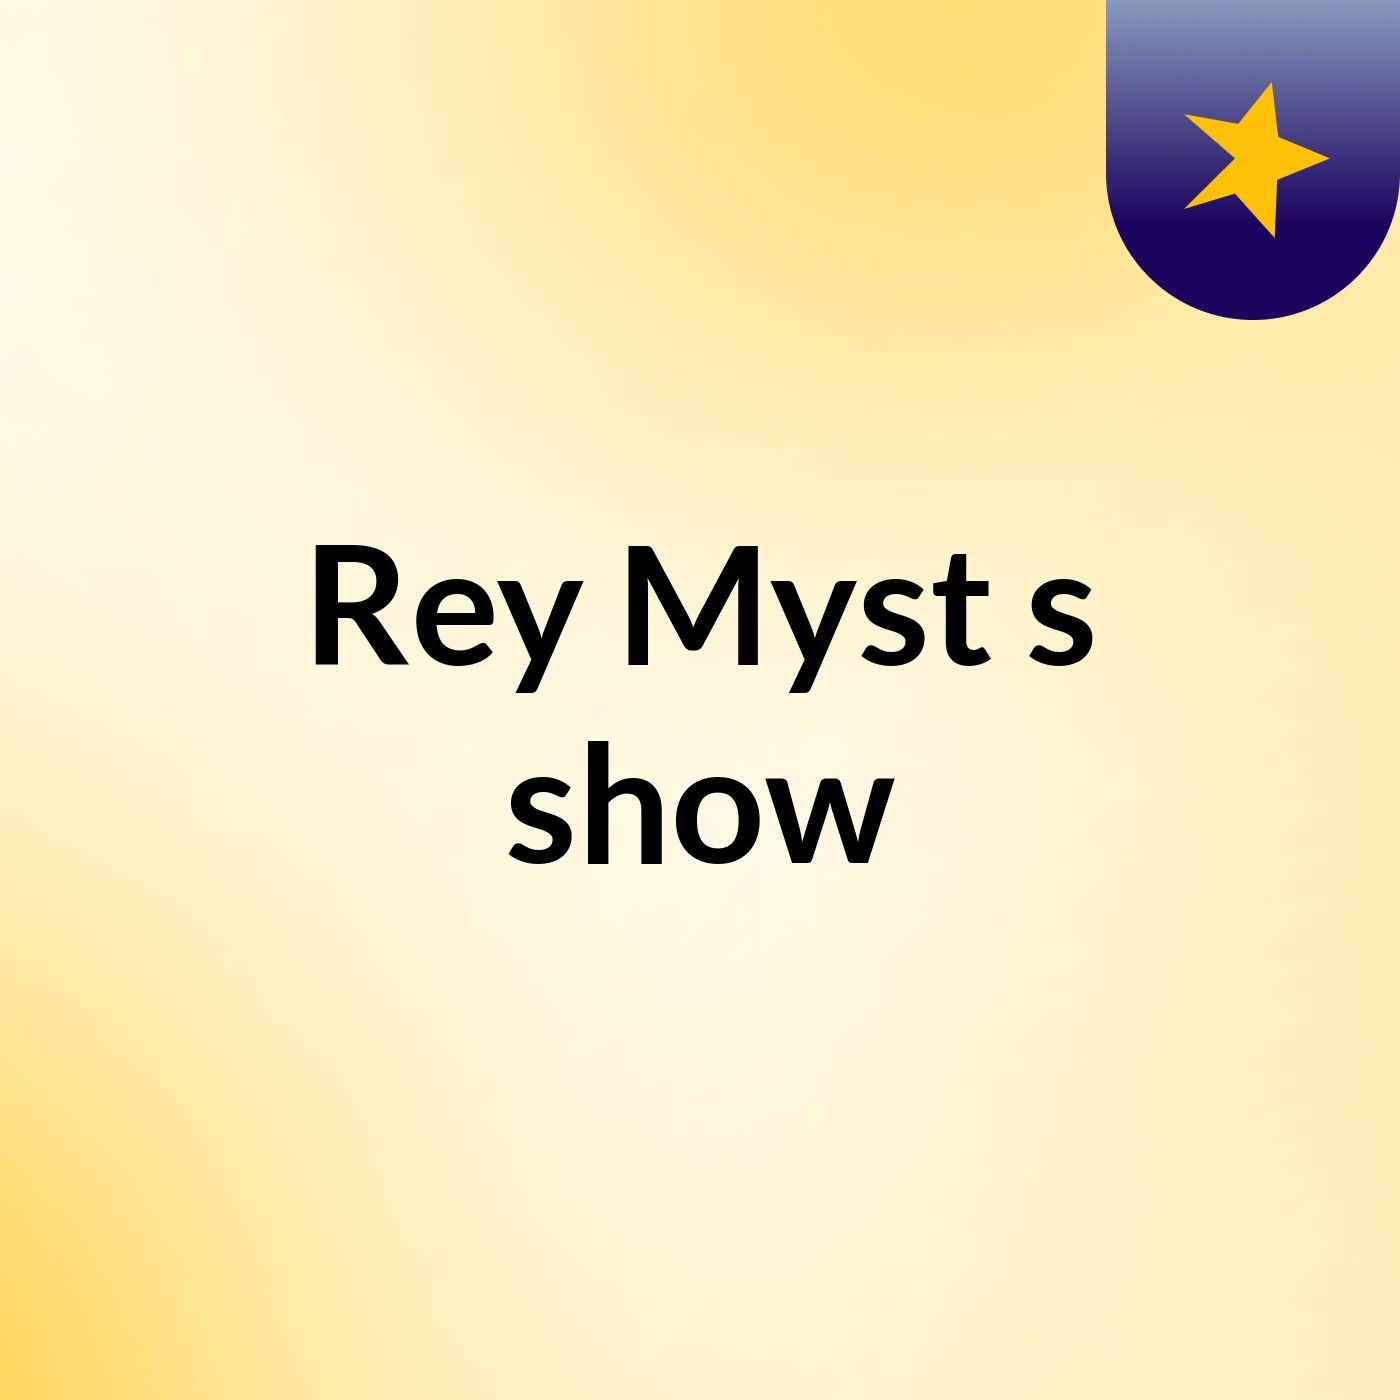 Rey Myst's show